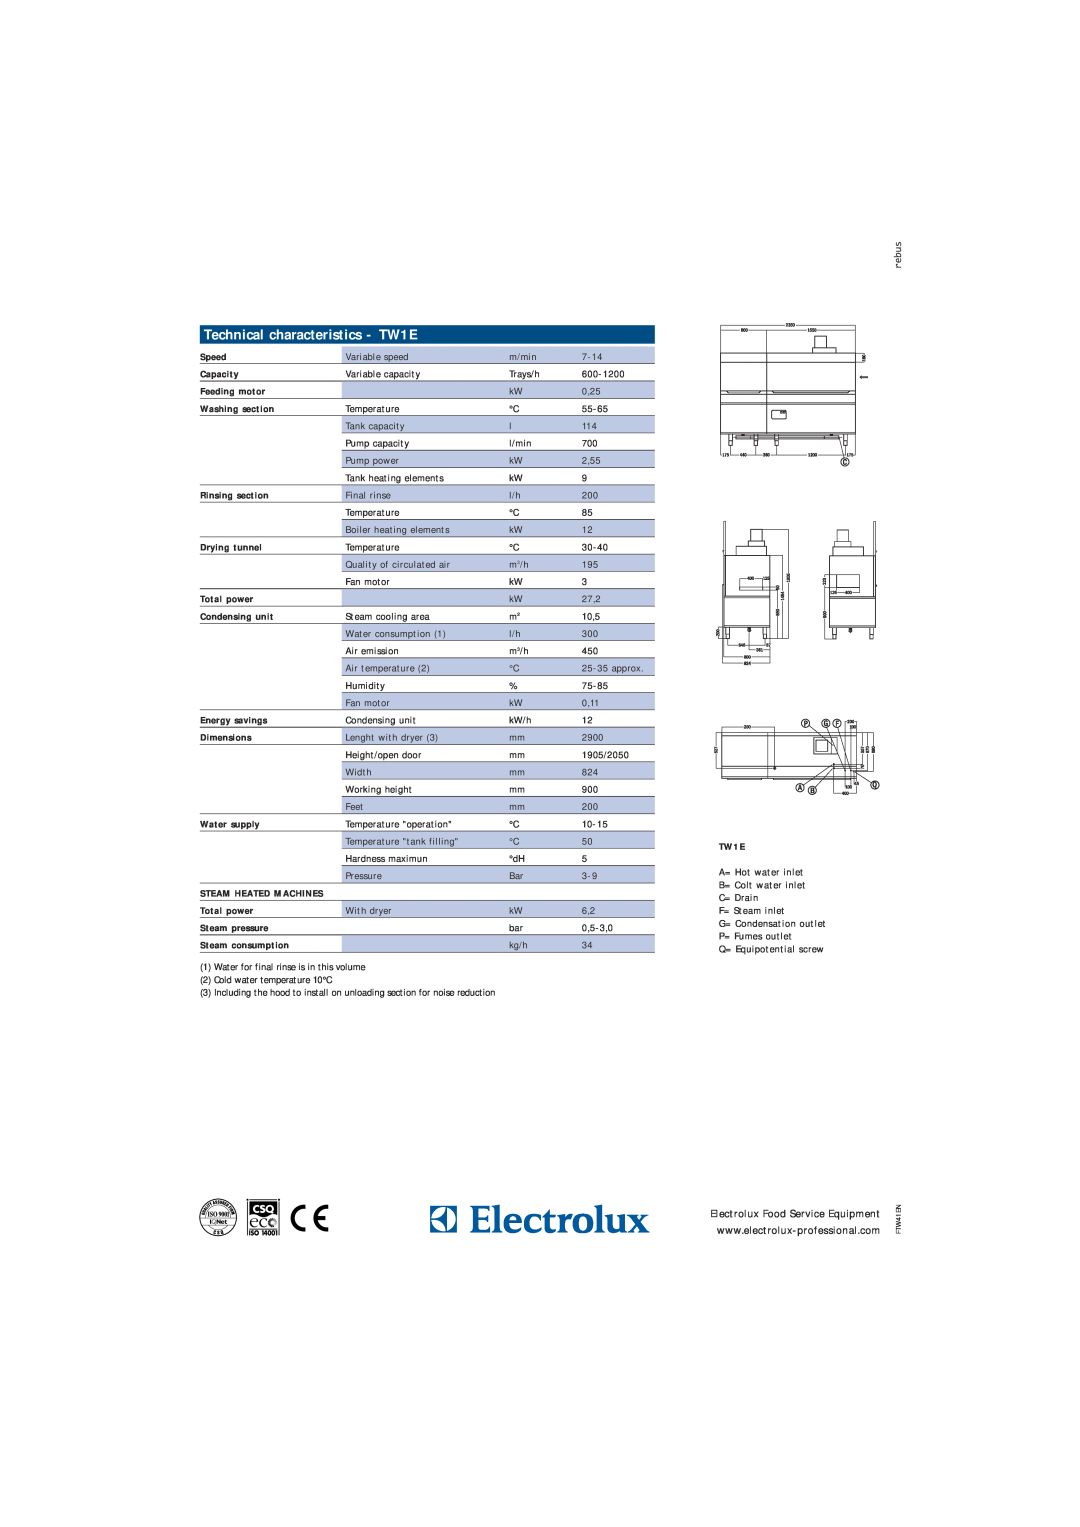 Electrolux manual Technical characteristics - TW1E, Electrolux Food Service Equipment 